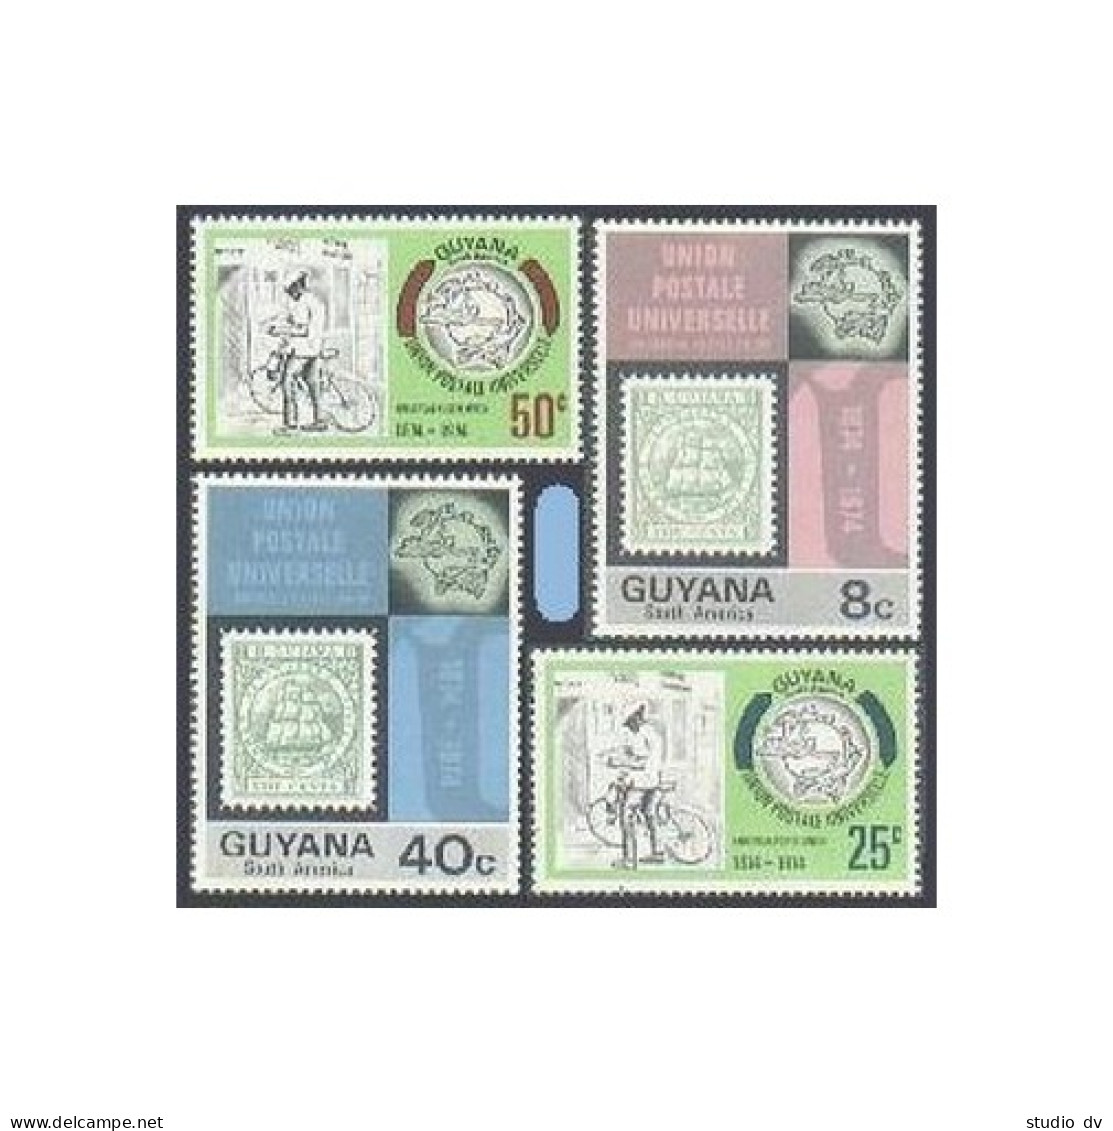 Guyana 197-200,MNH.Michel 460-463. UPU-100,1974.Sailing Ship,Stamp On Stamp. - Guyane (1966-...)